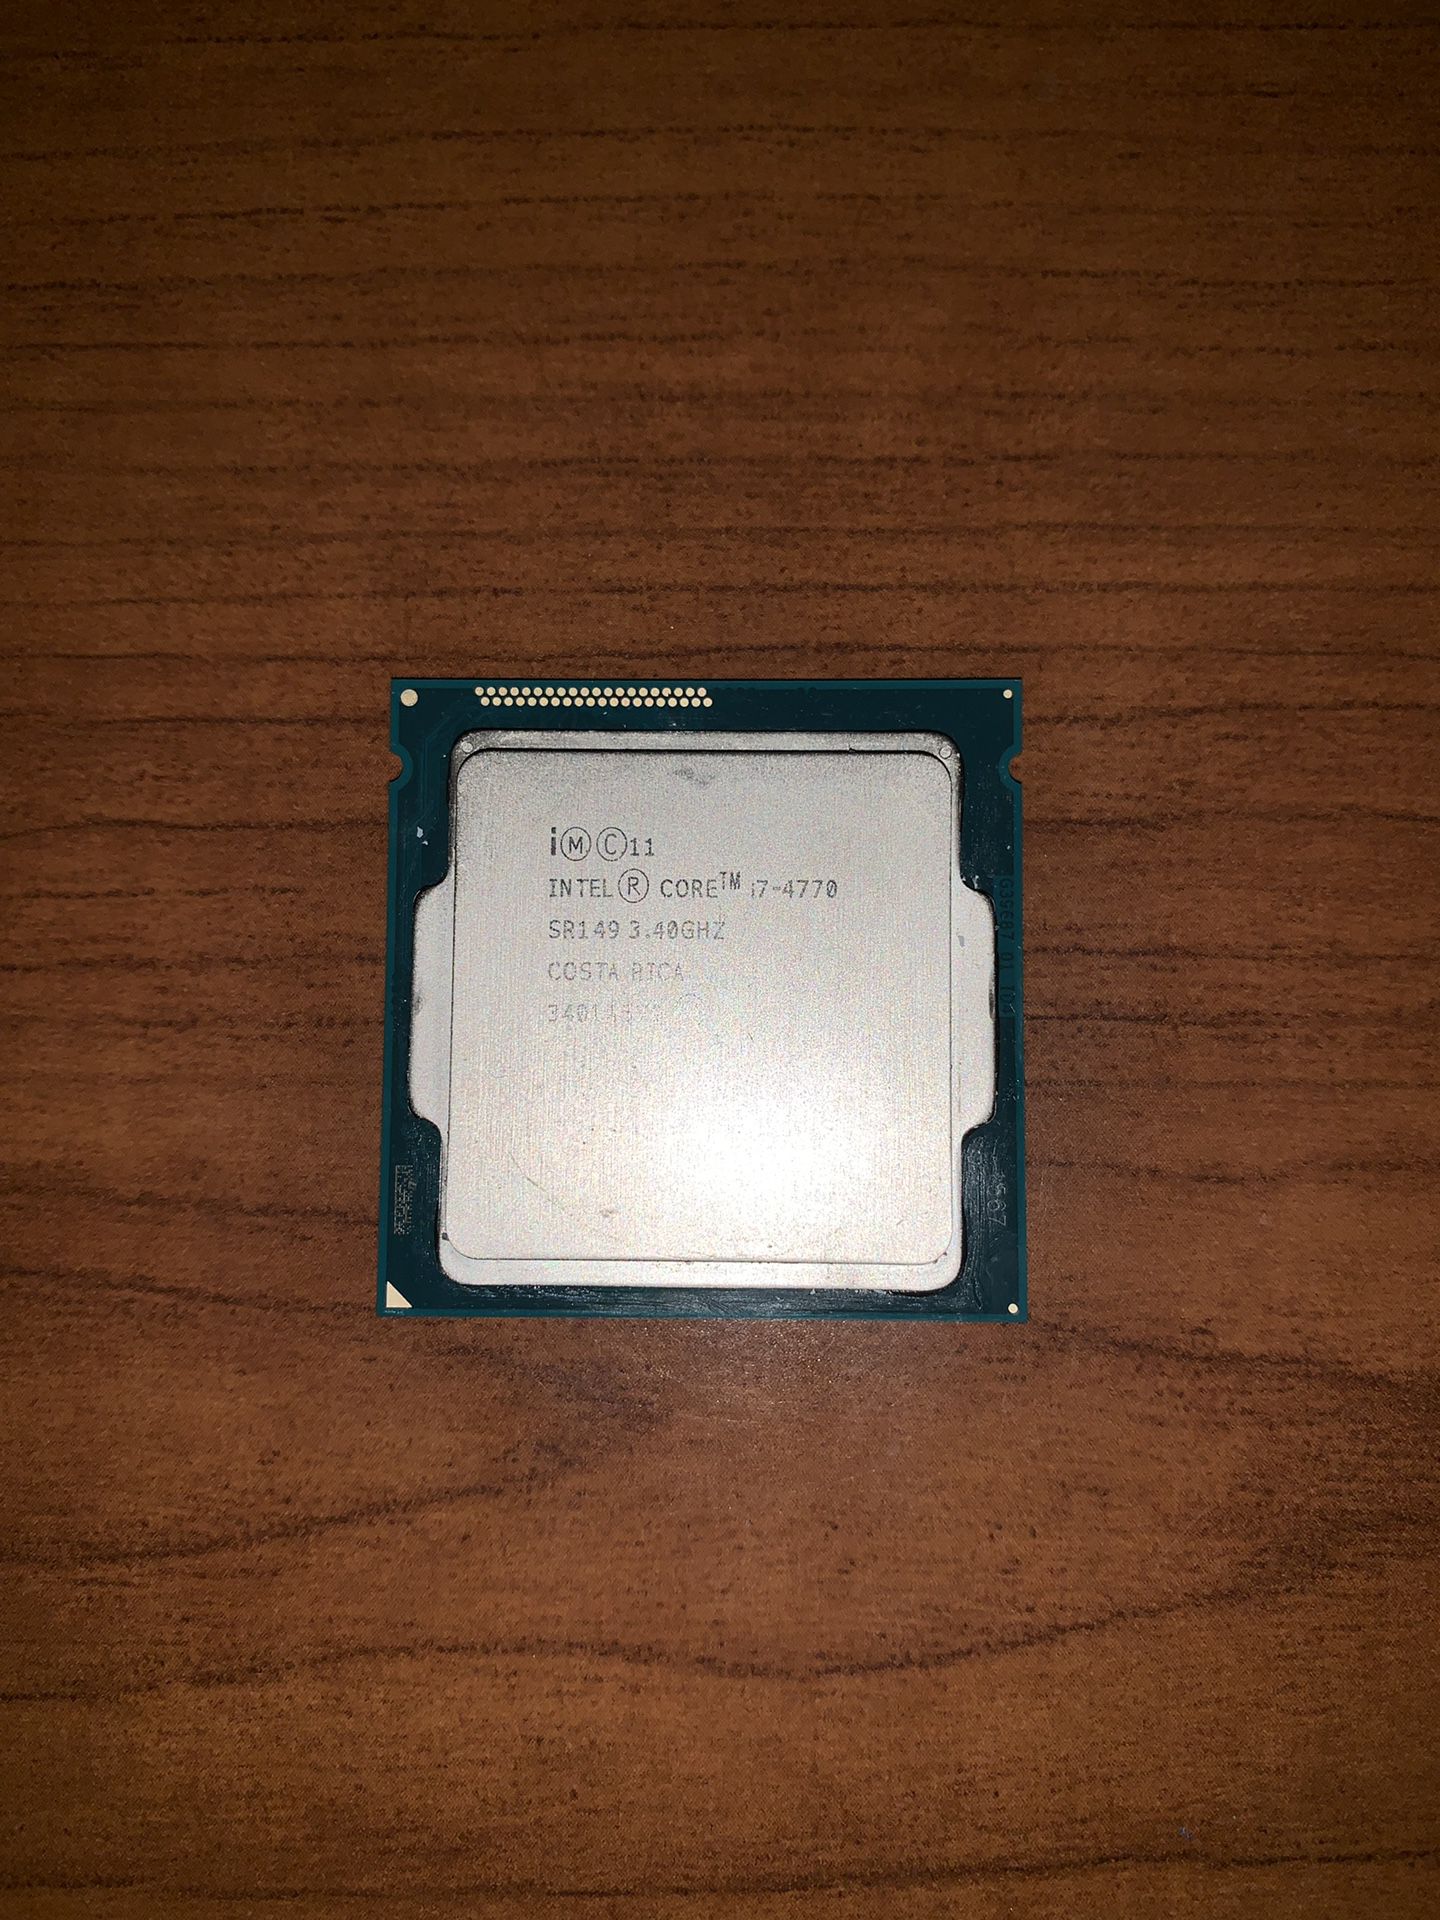 I7-4770 intel processor